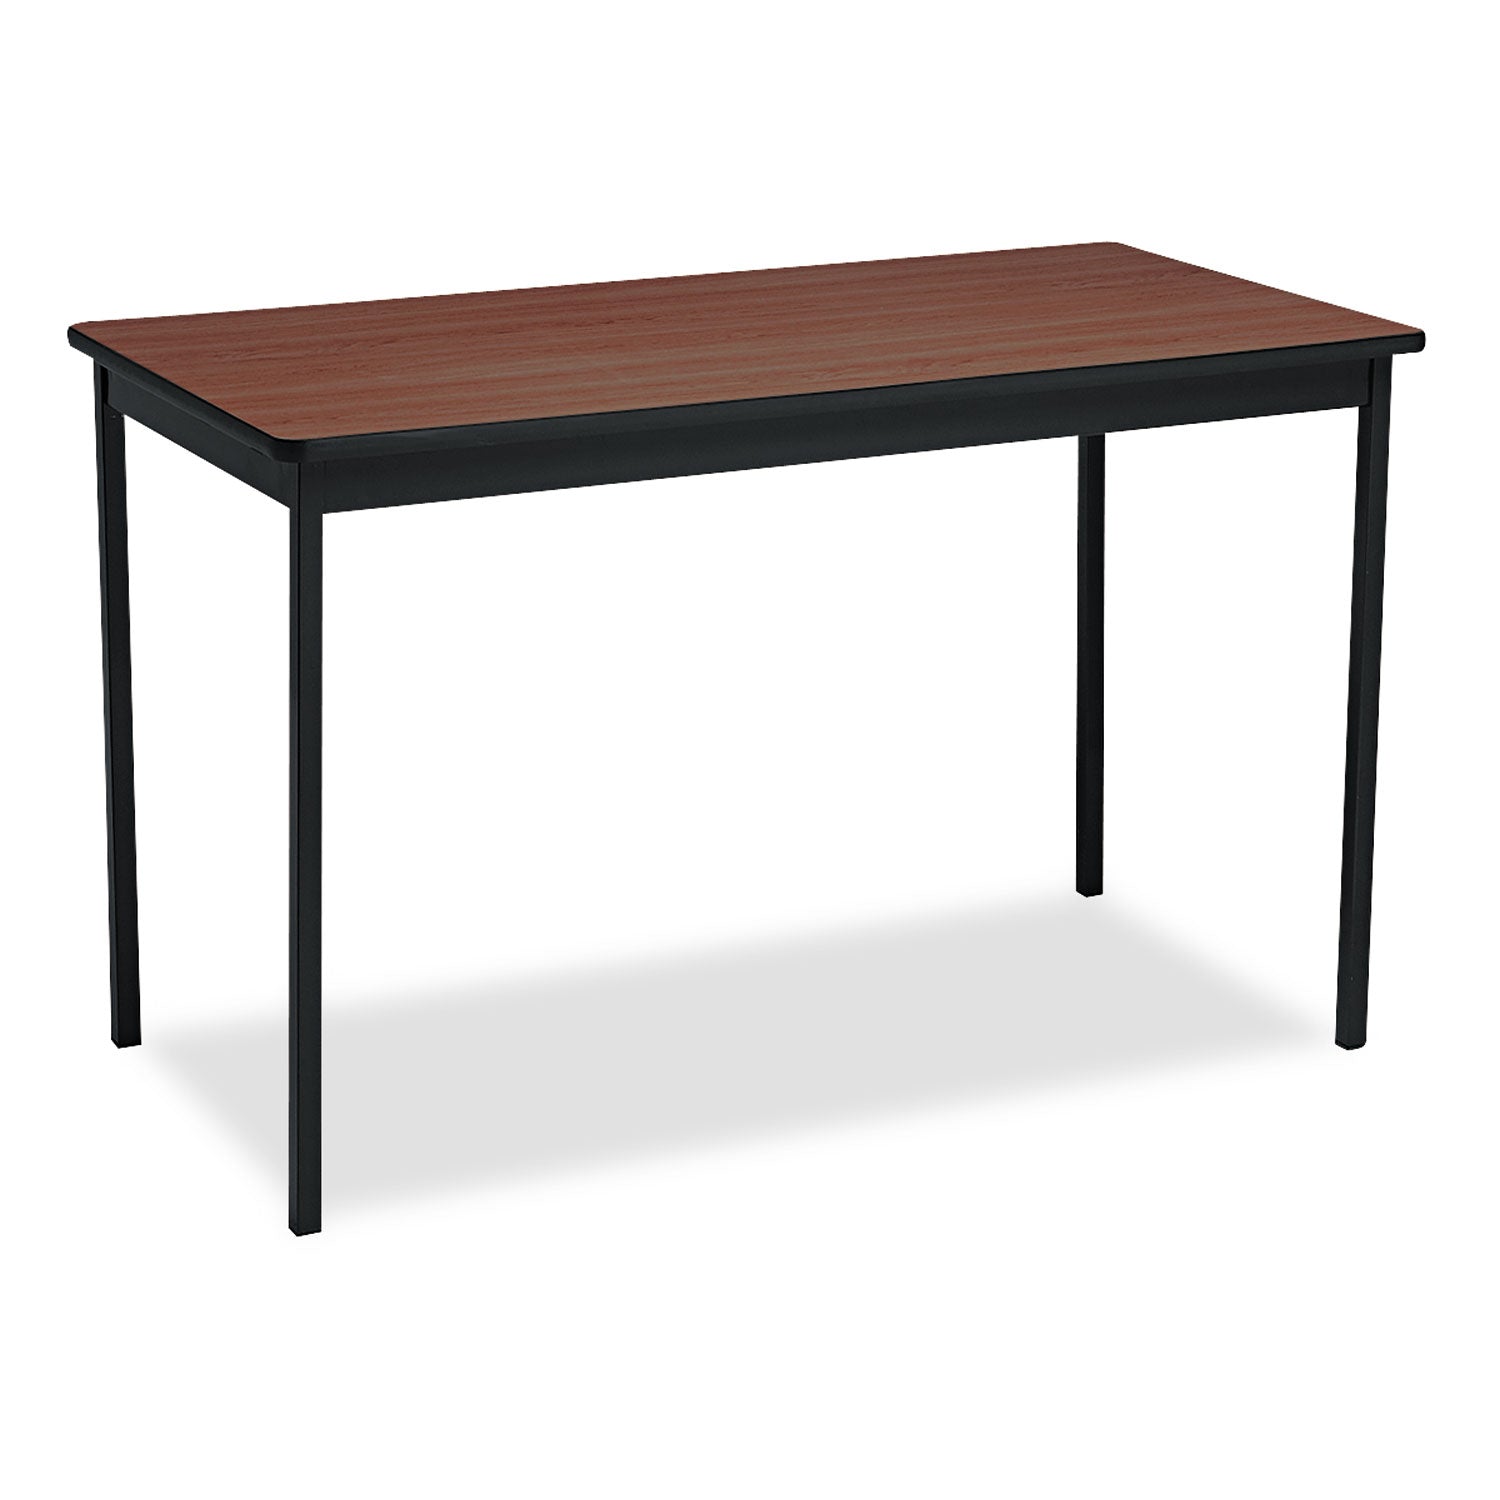 Utility Table, Rectangular, 48w x 24d x 30h, Walnut/Black - 